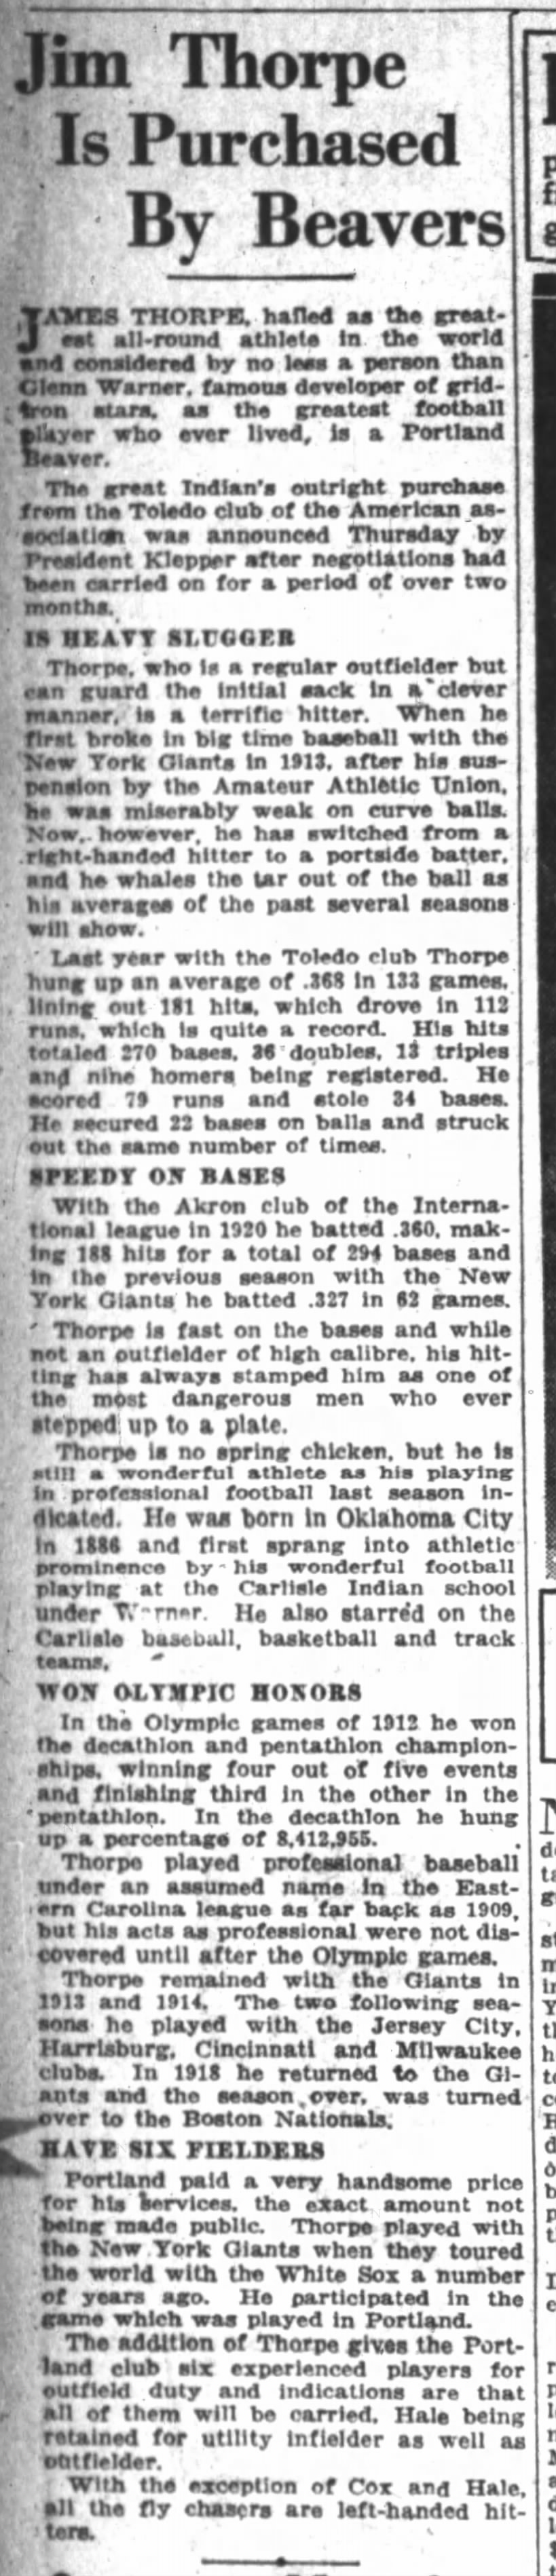 Jim Thorpe is Purchased by Portland Beavers baseball team, to play 1922 season